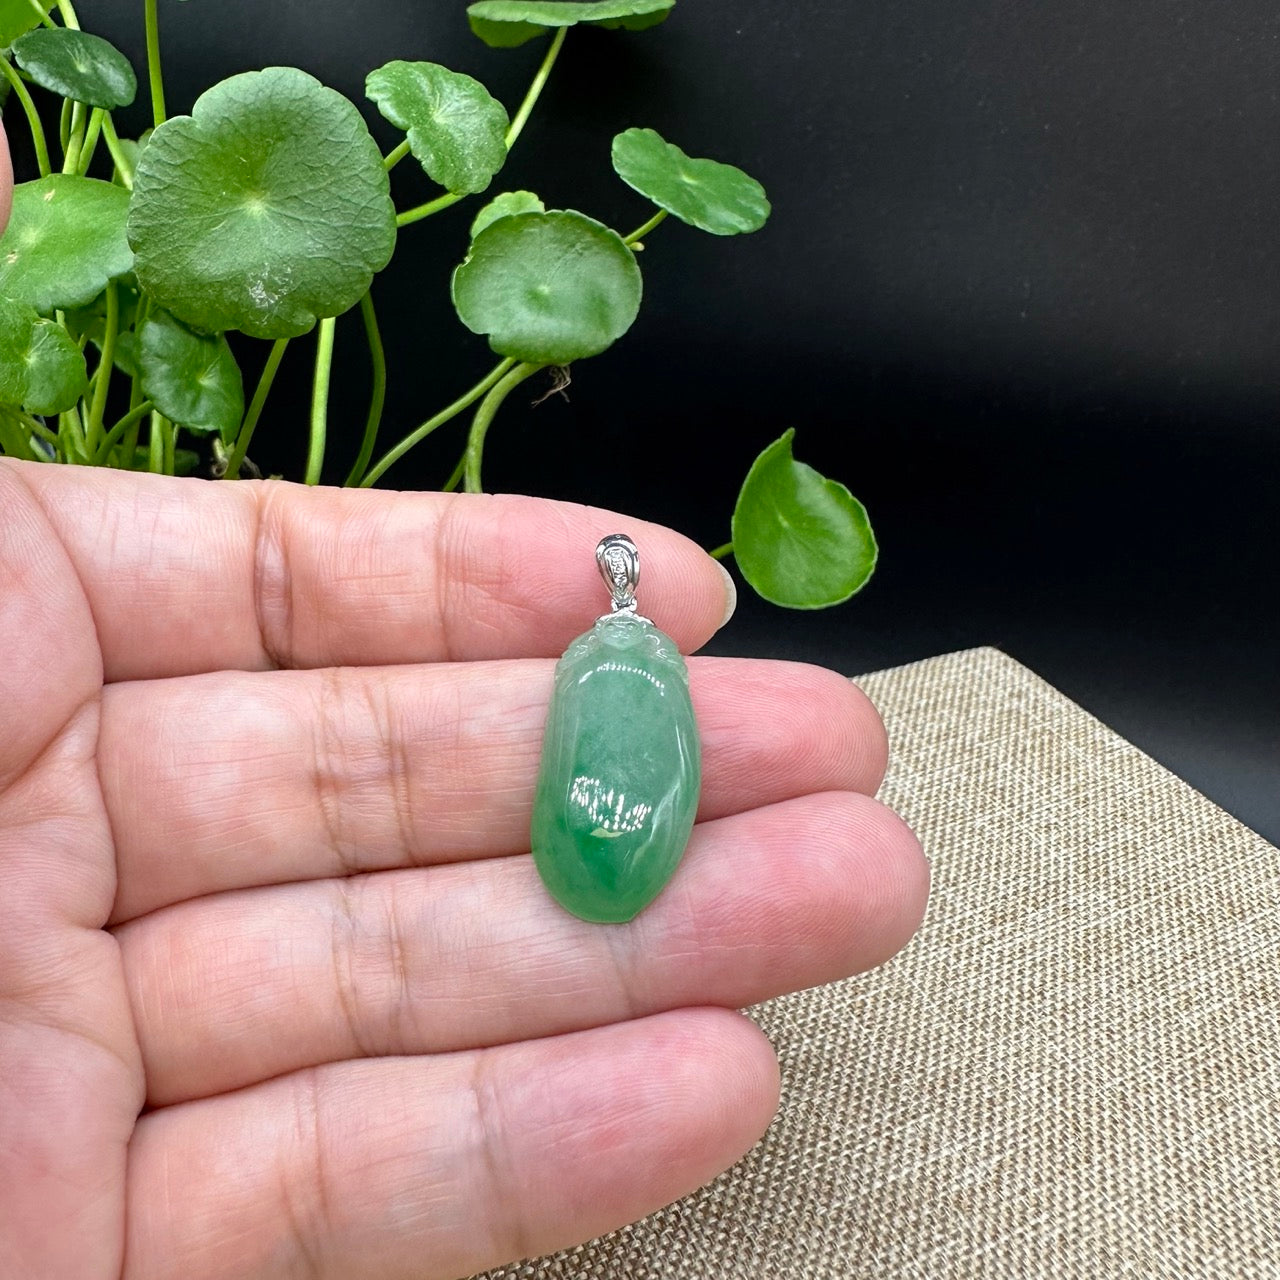 Natural Green Jadeite Jade Shou Tao (Longevity Peach) Necklace With 18k White Gold Diamond Bail